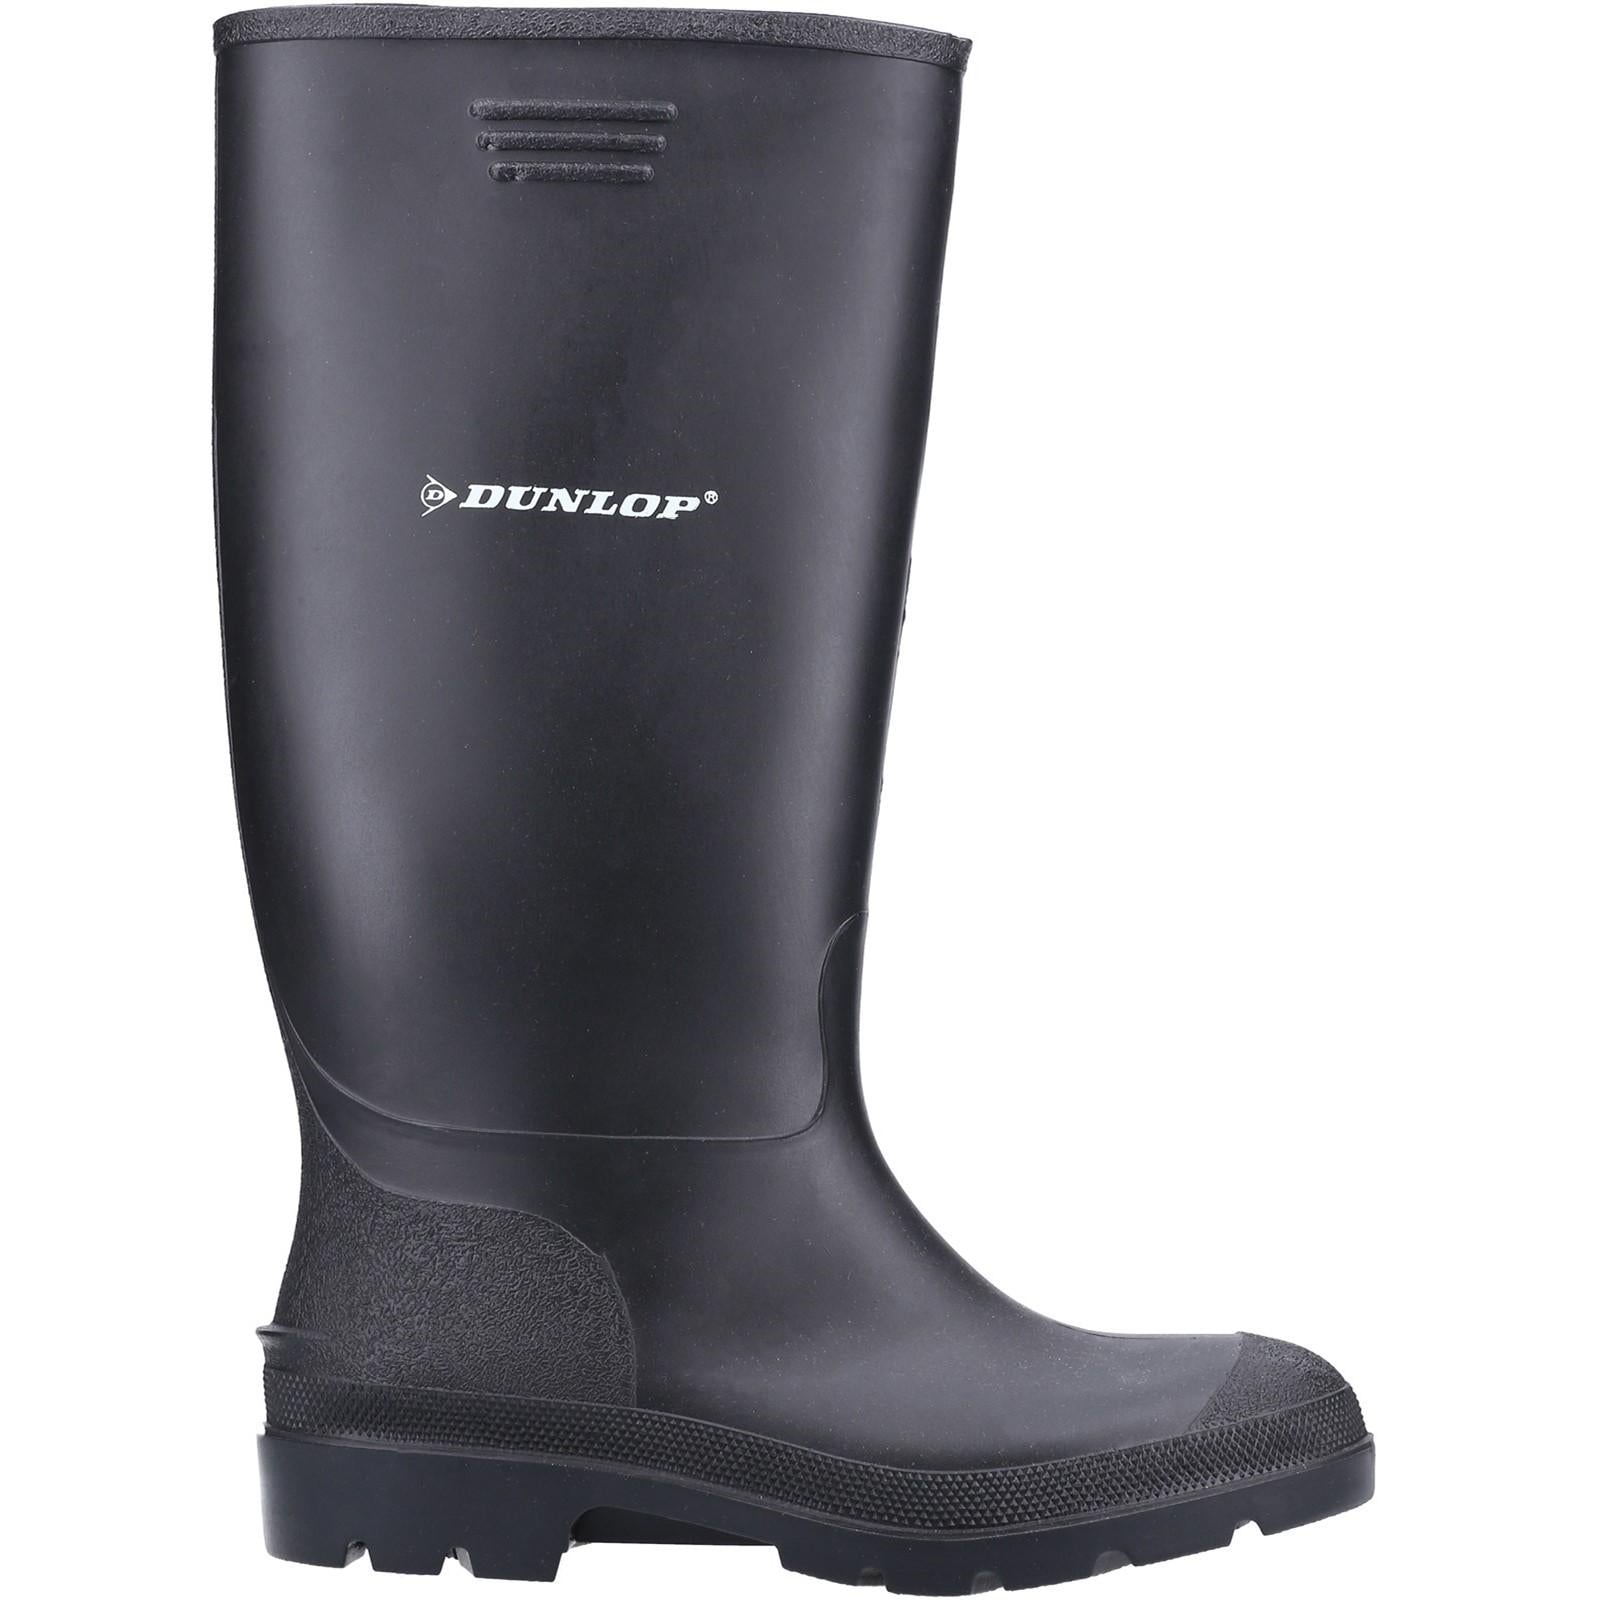 Dunlop Pricemastor Wellington Boots